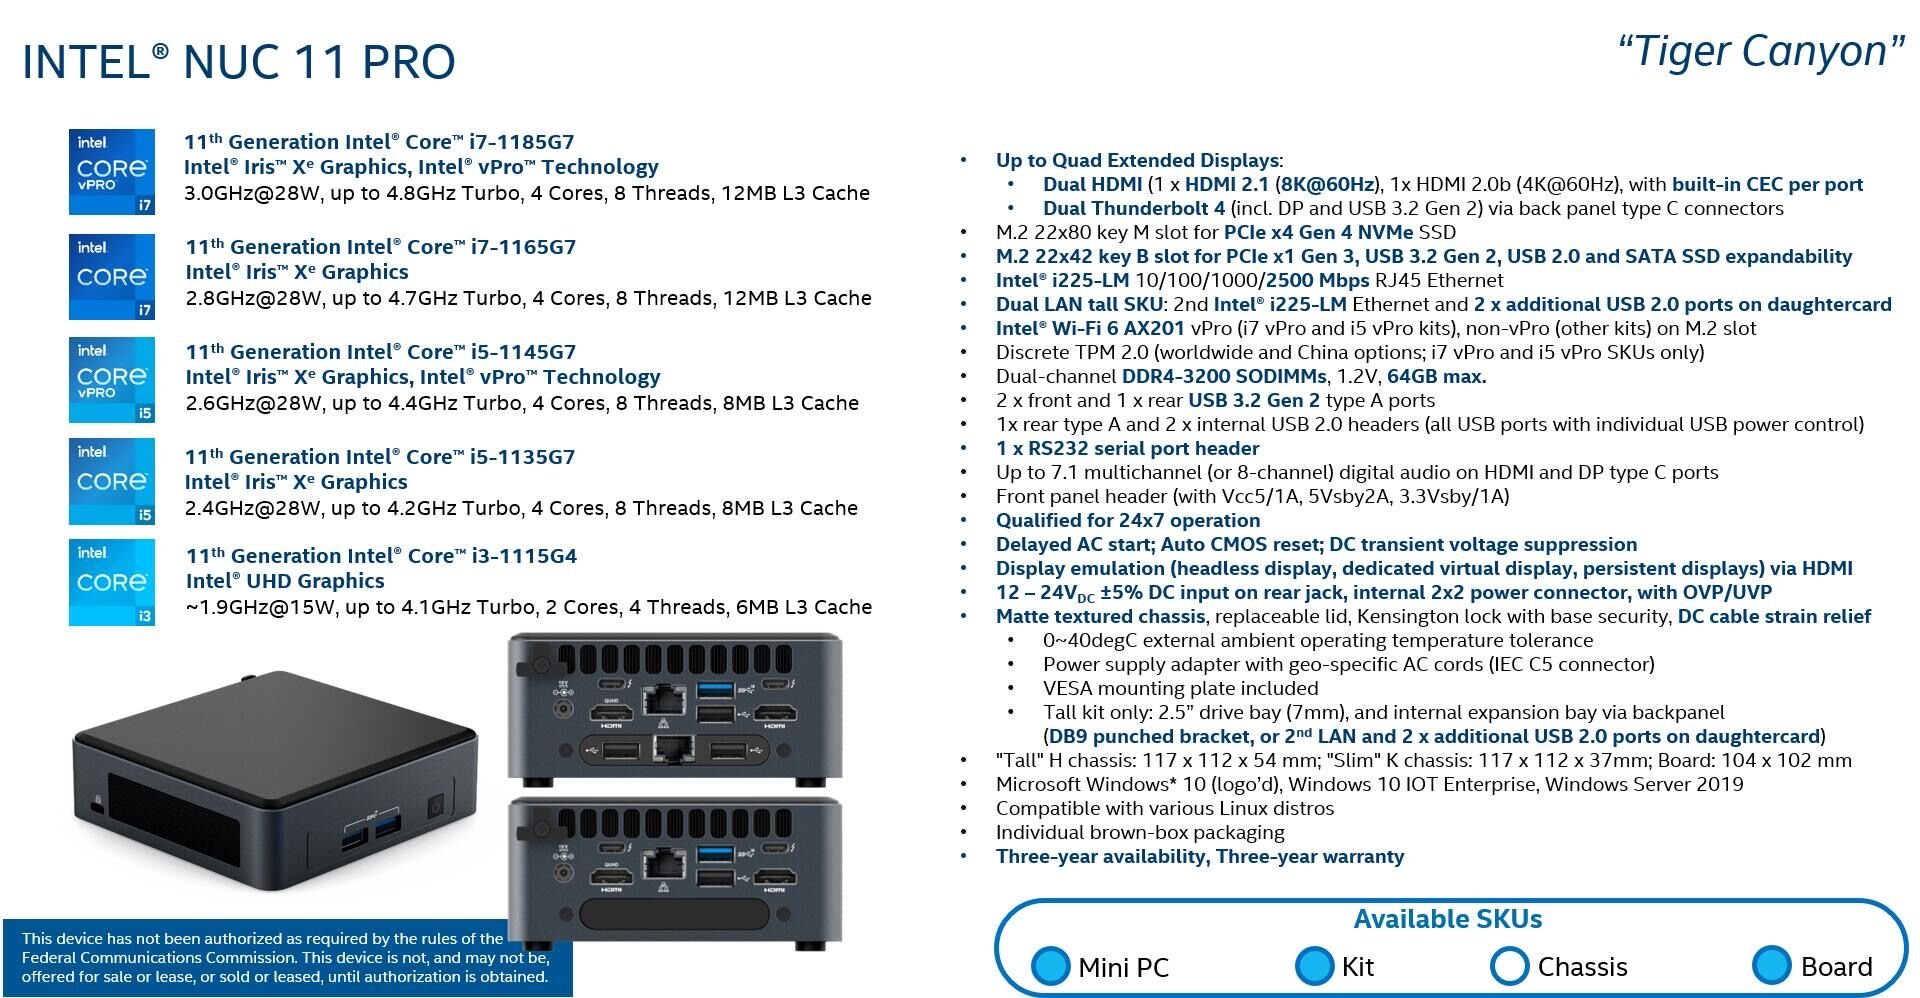 Barry gloeilamp raket Intel “Tiger Canyon” NUC 11 Pro specifications have leaked | KitGuru